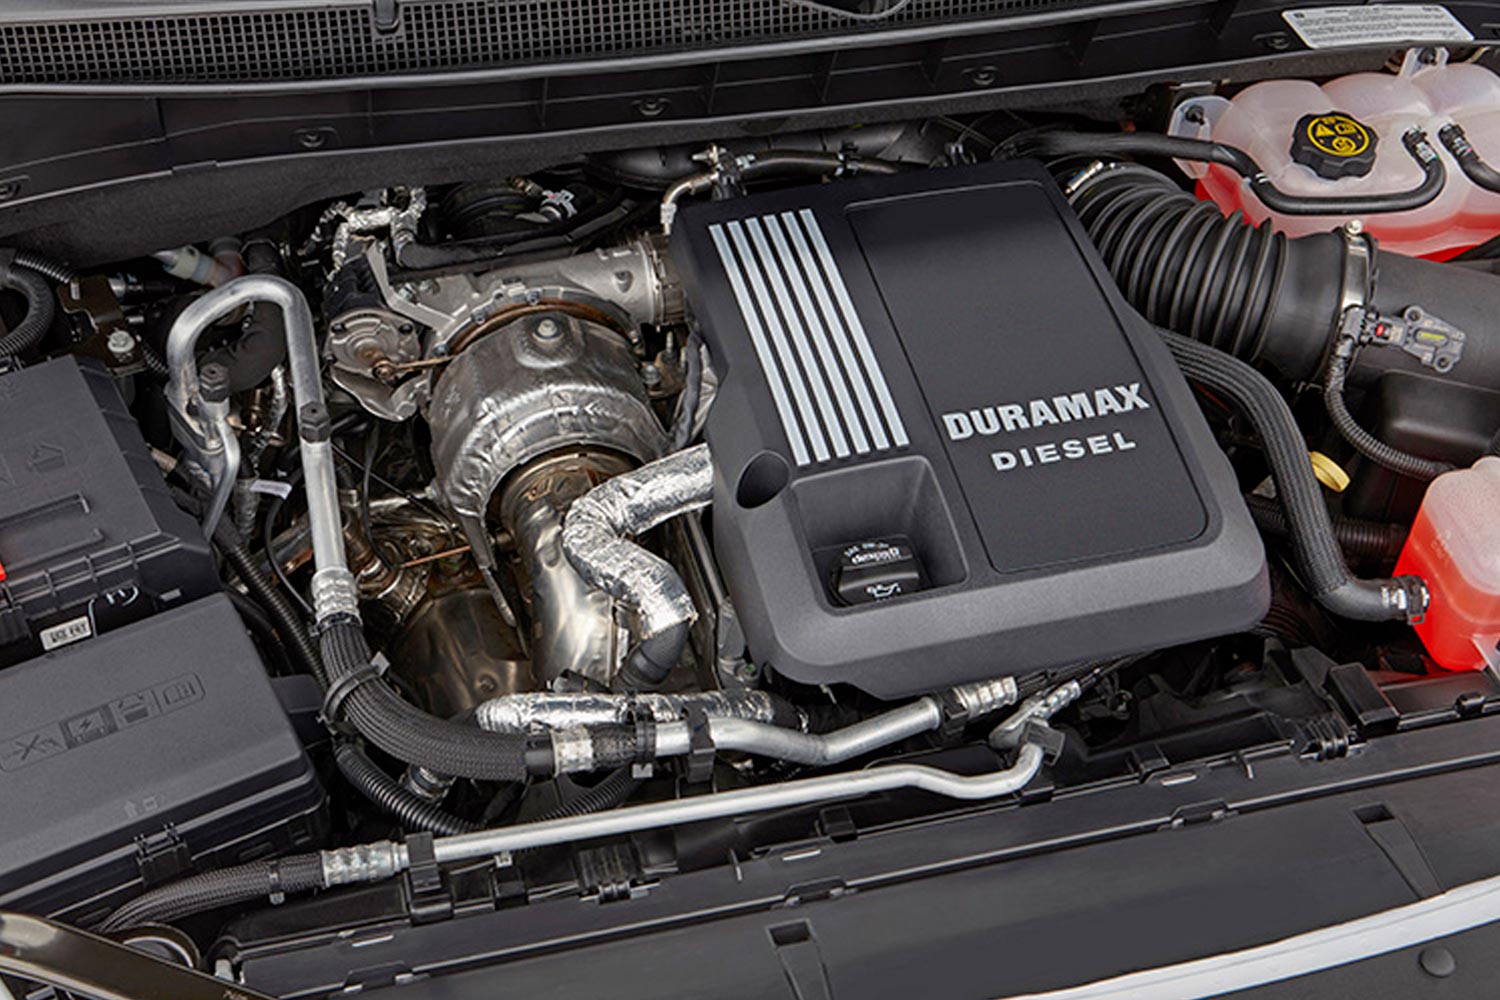 view of a Duramax diesel engine in a car